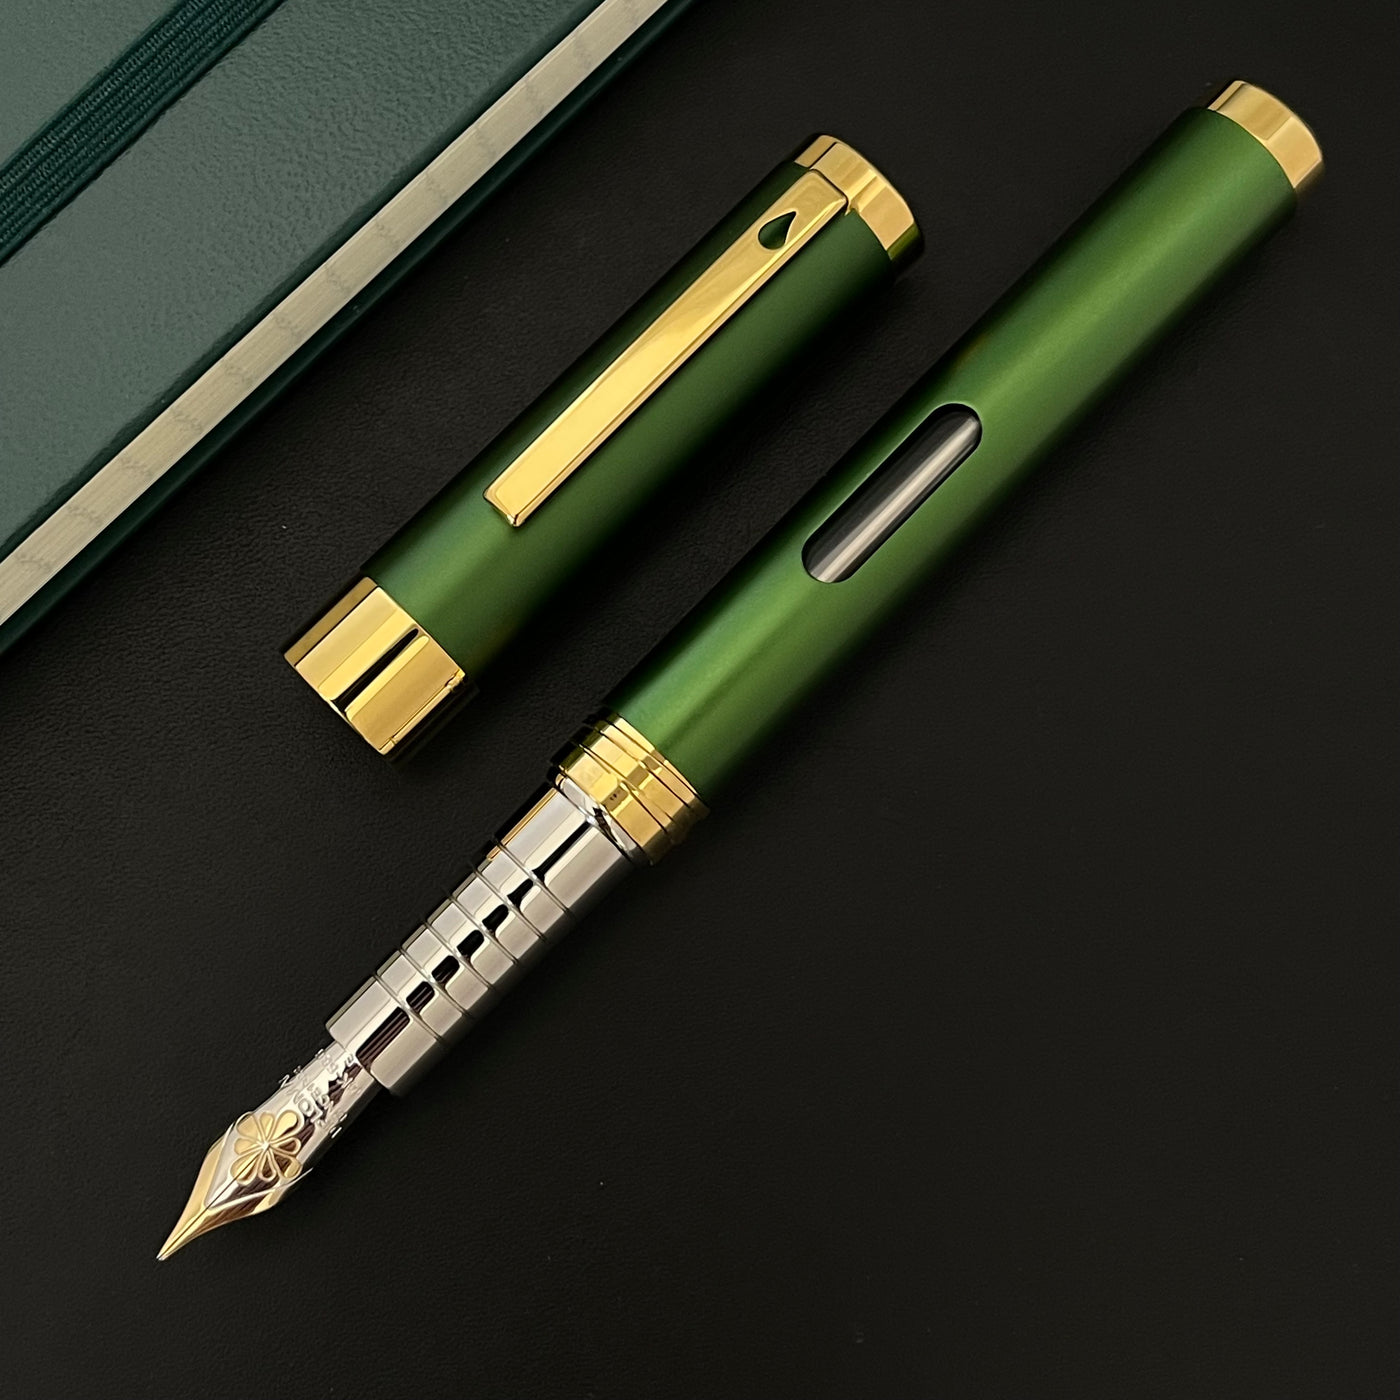 Diplomat Nexus Fountain Pen - Green (14kt Gold Nib)